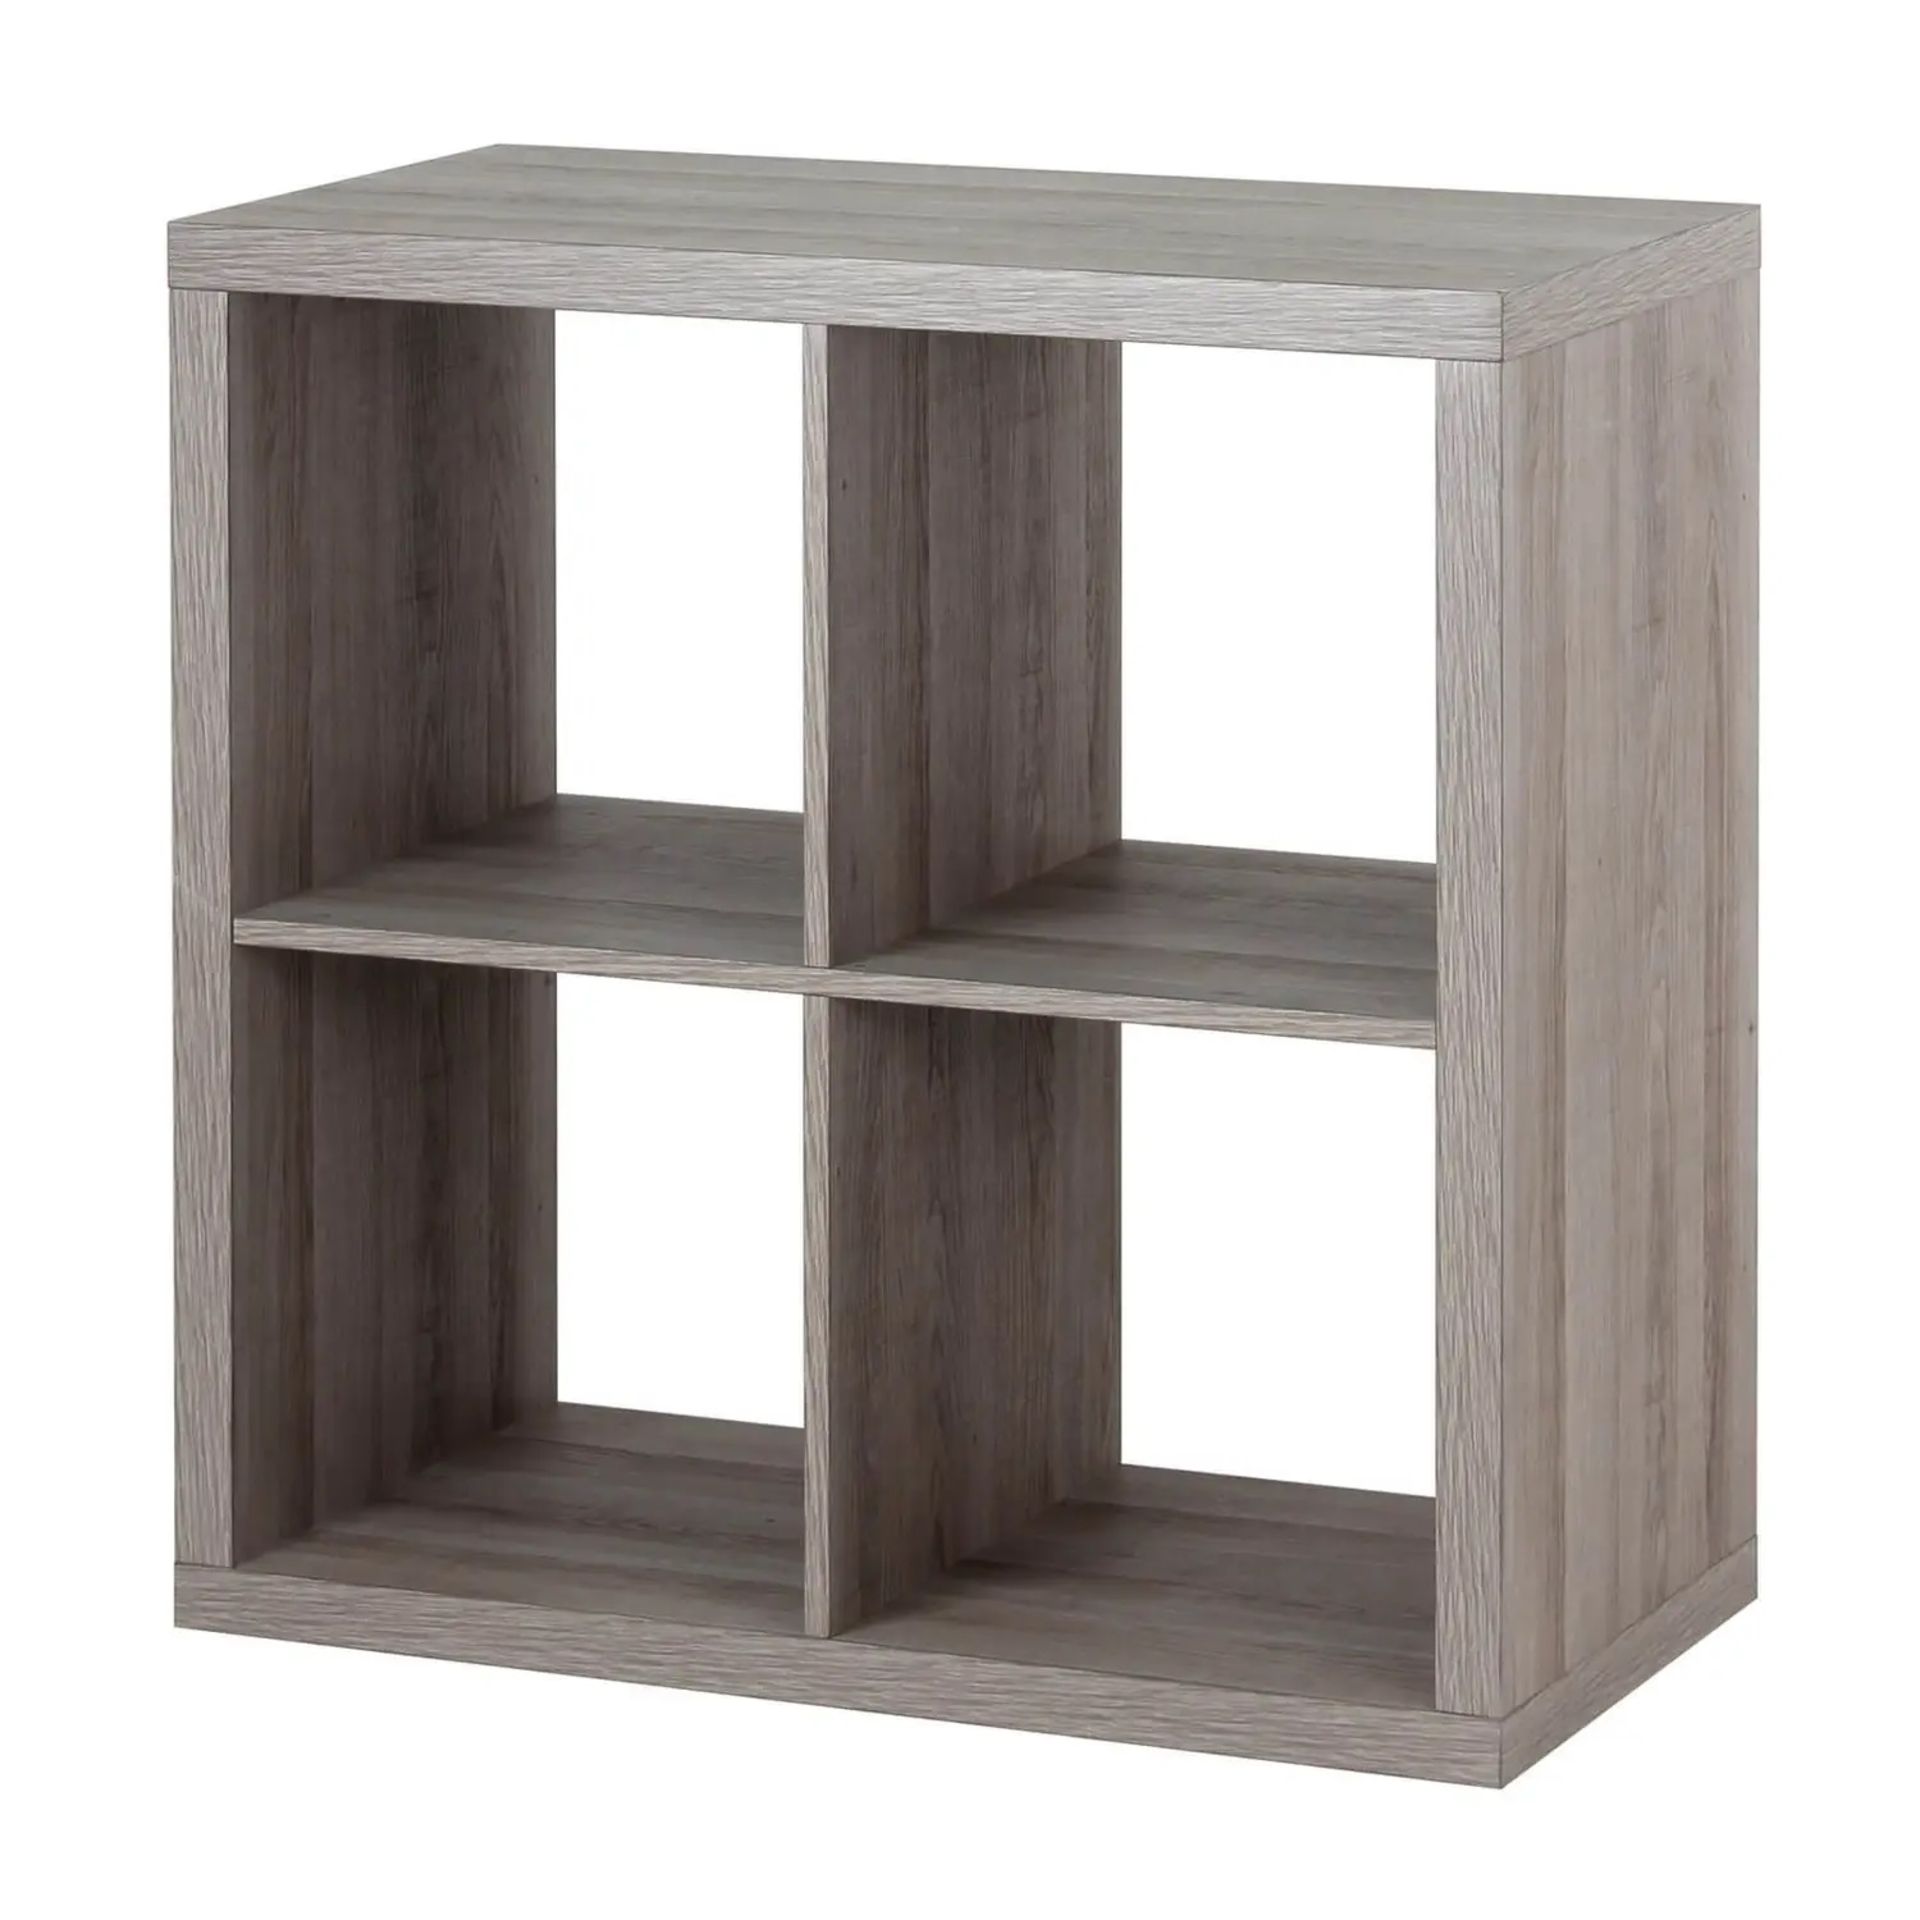 Clever Cube 2x2 Storage Unit - Grey Oak RRP £60